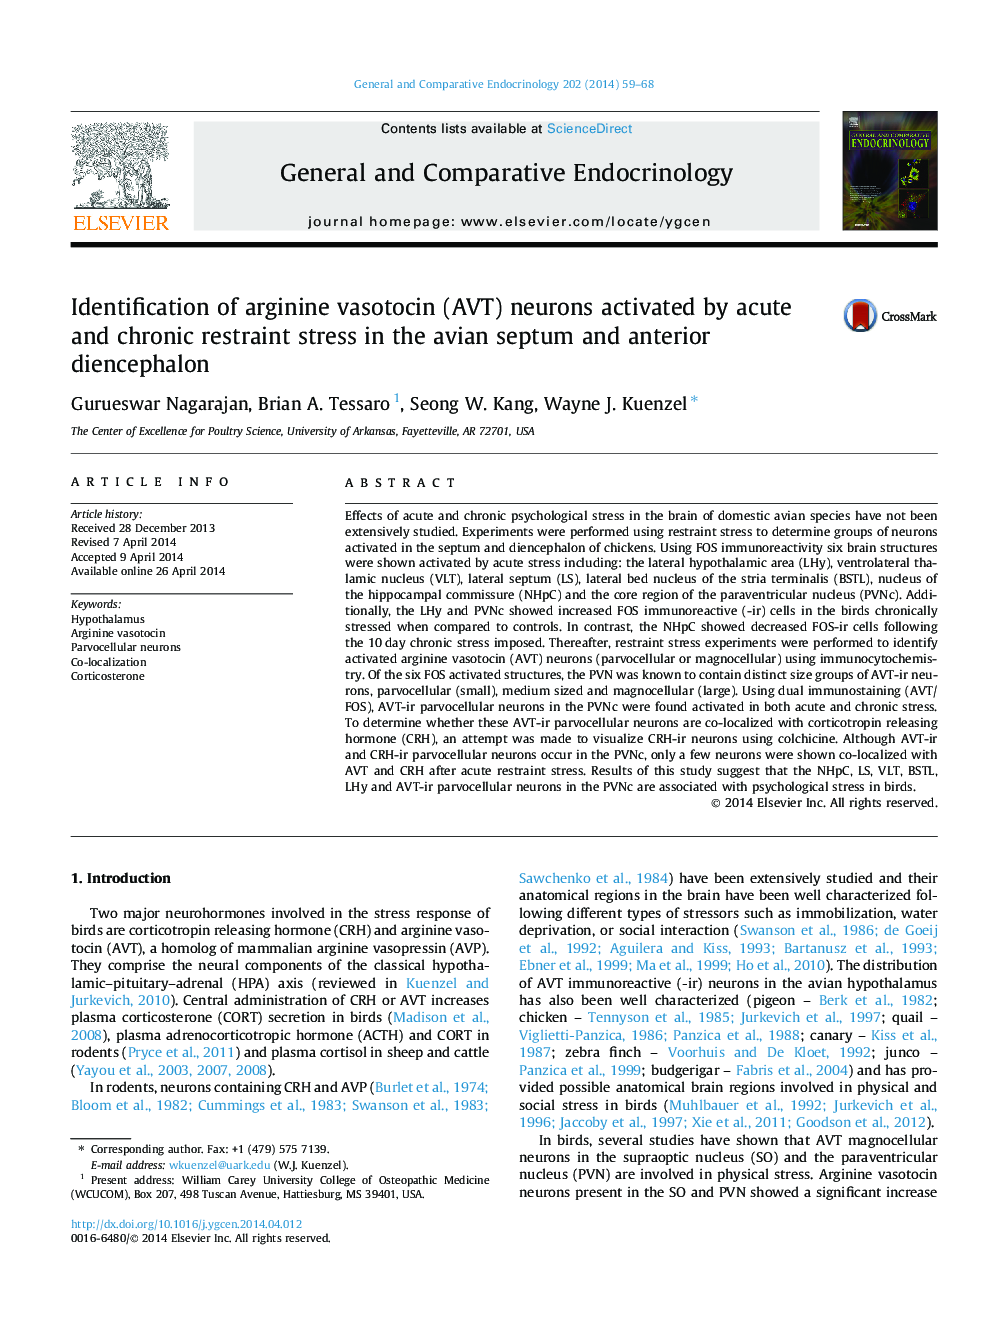 Identification of arginine vasotocin (AVT) neurons activated by acute and chronic restraint stress in the avian septum and anterior diencephalon